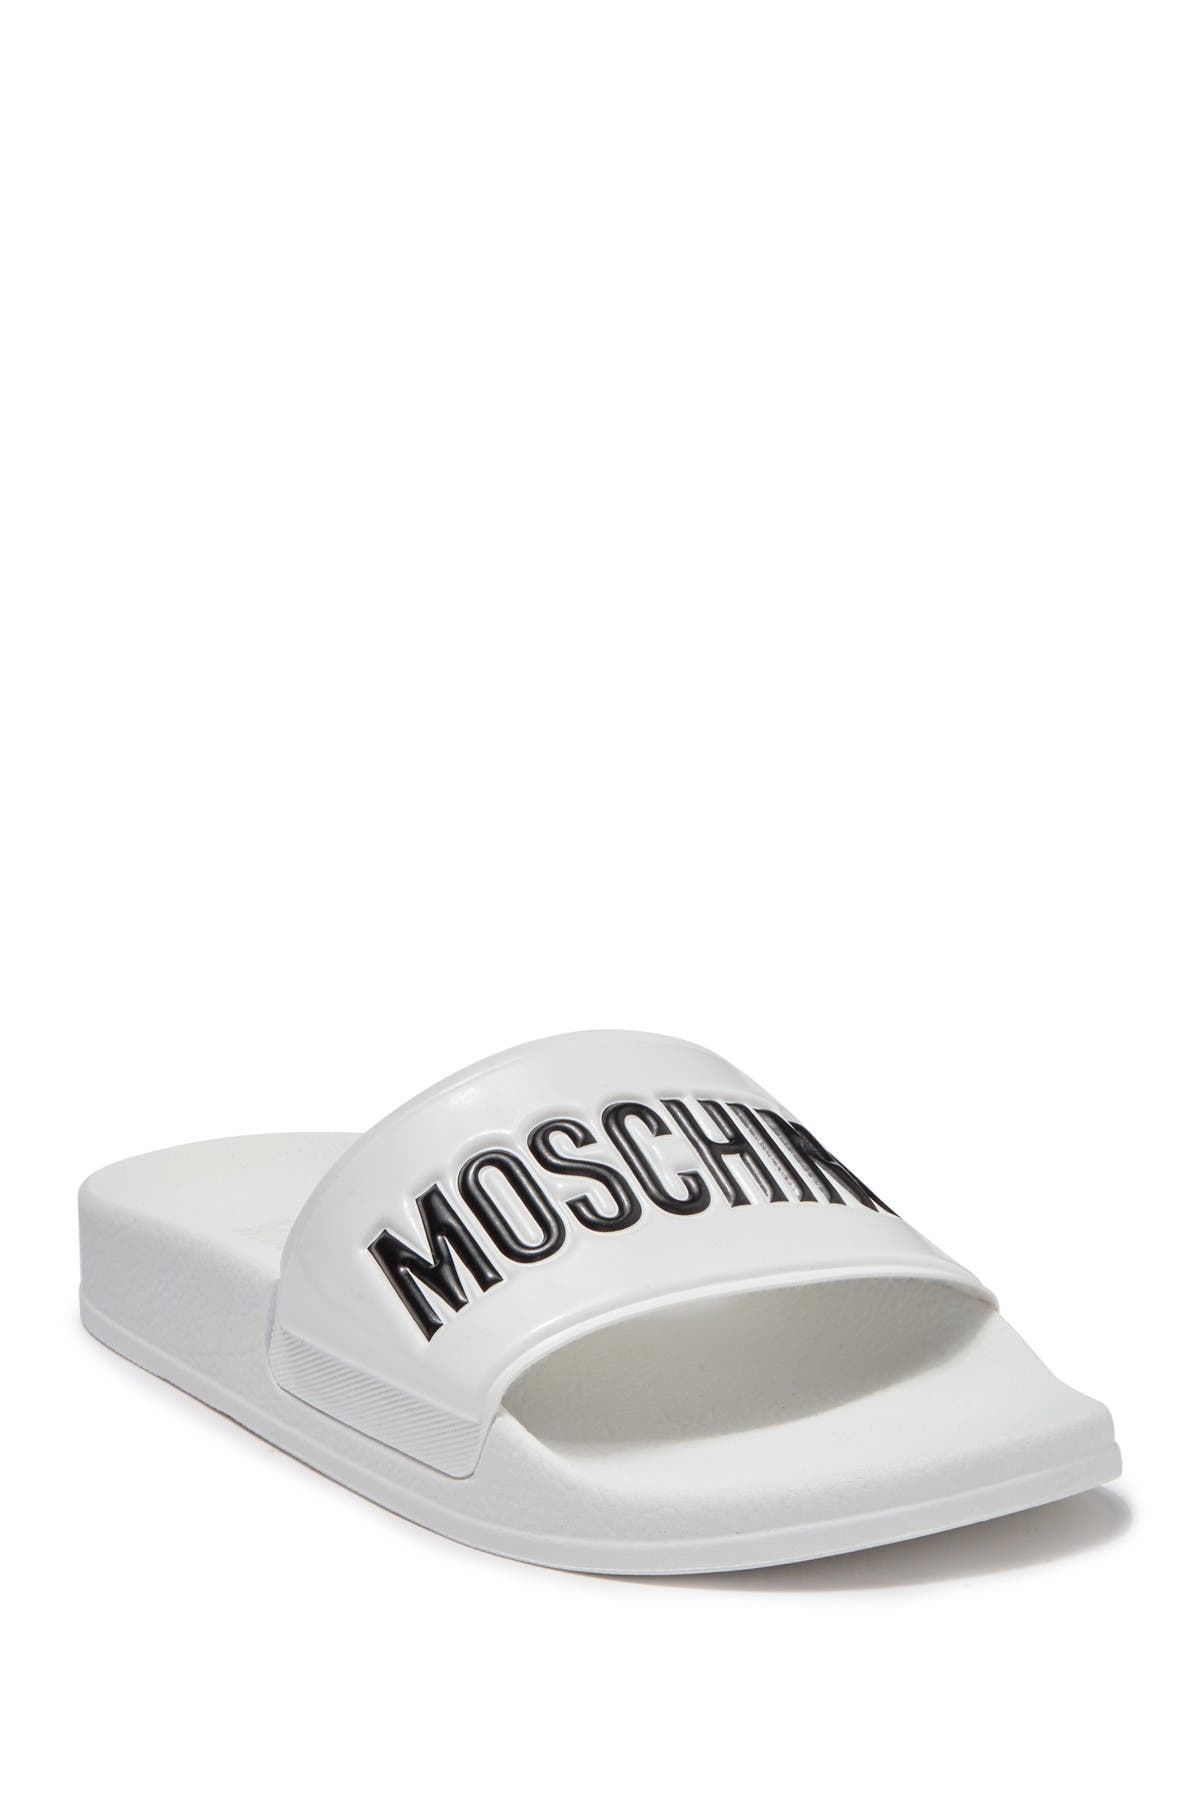 moschino slide sandals